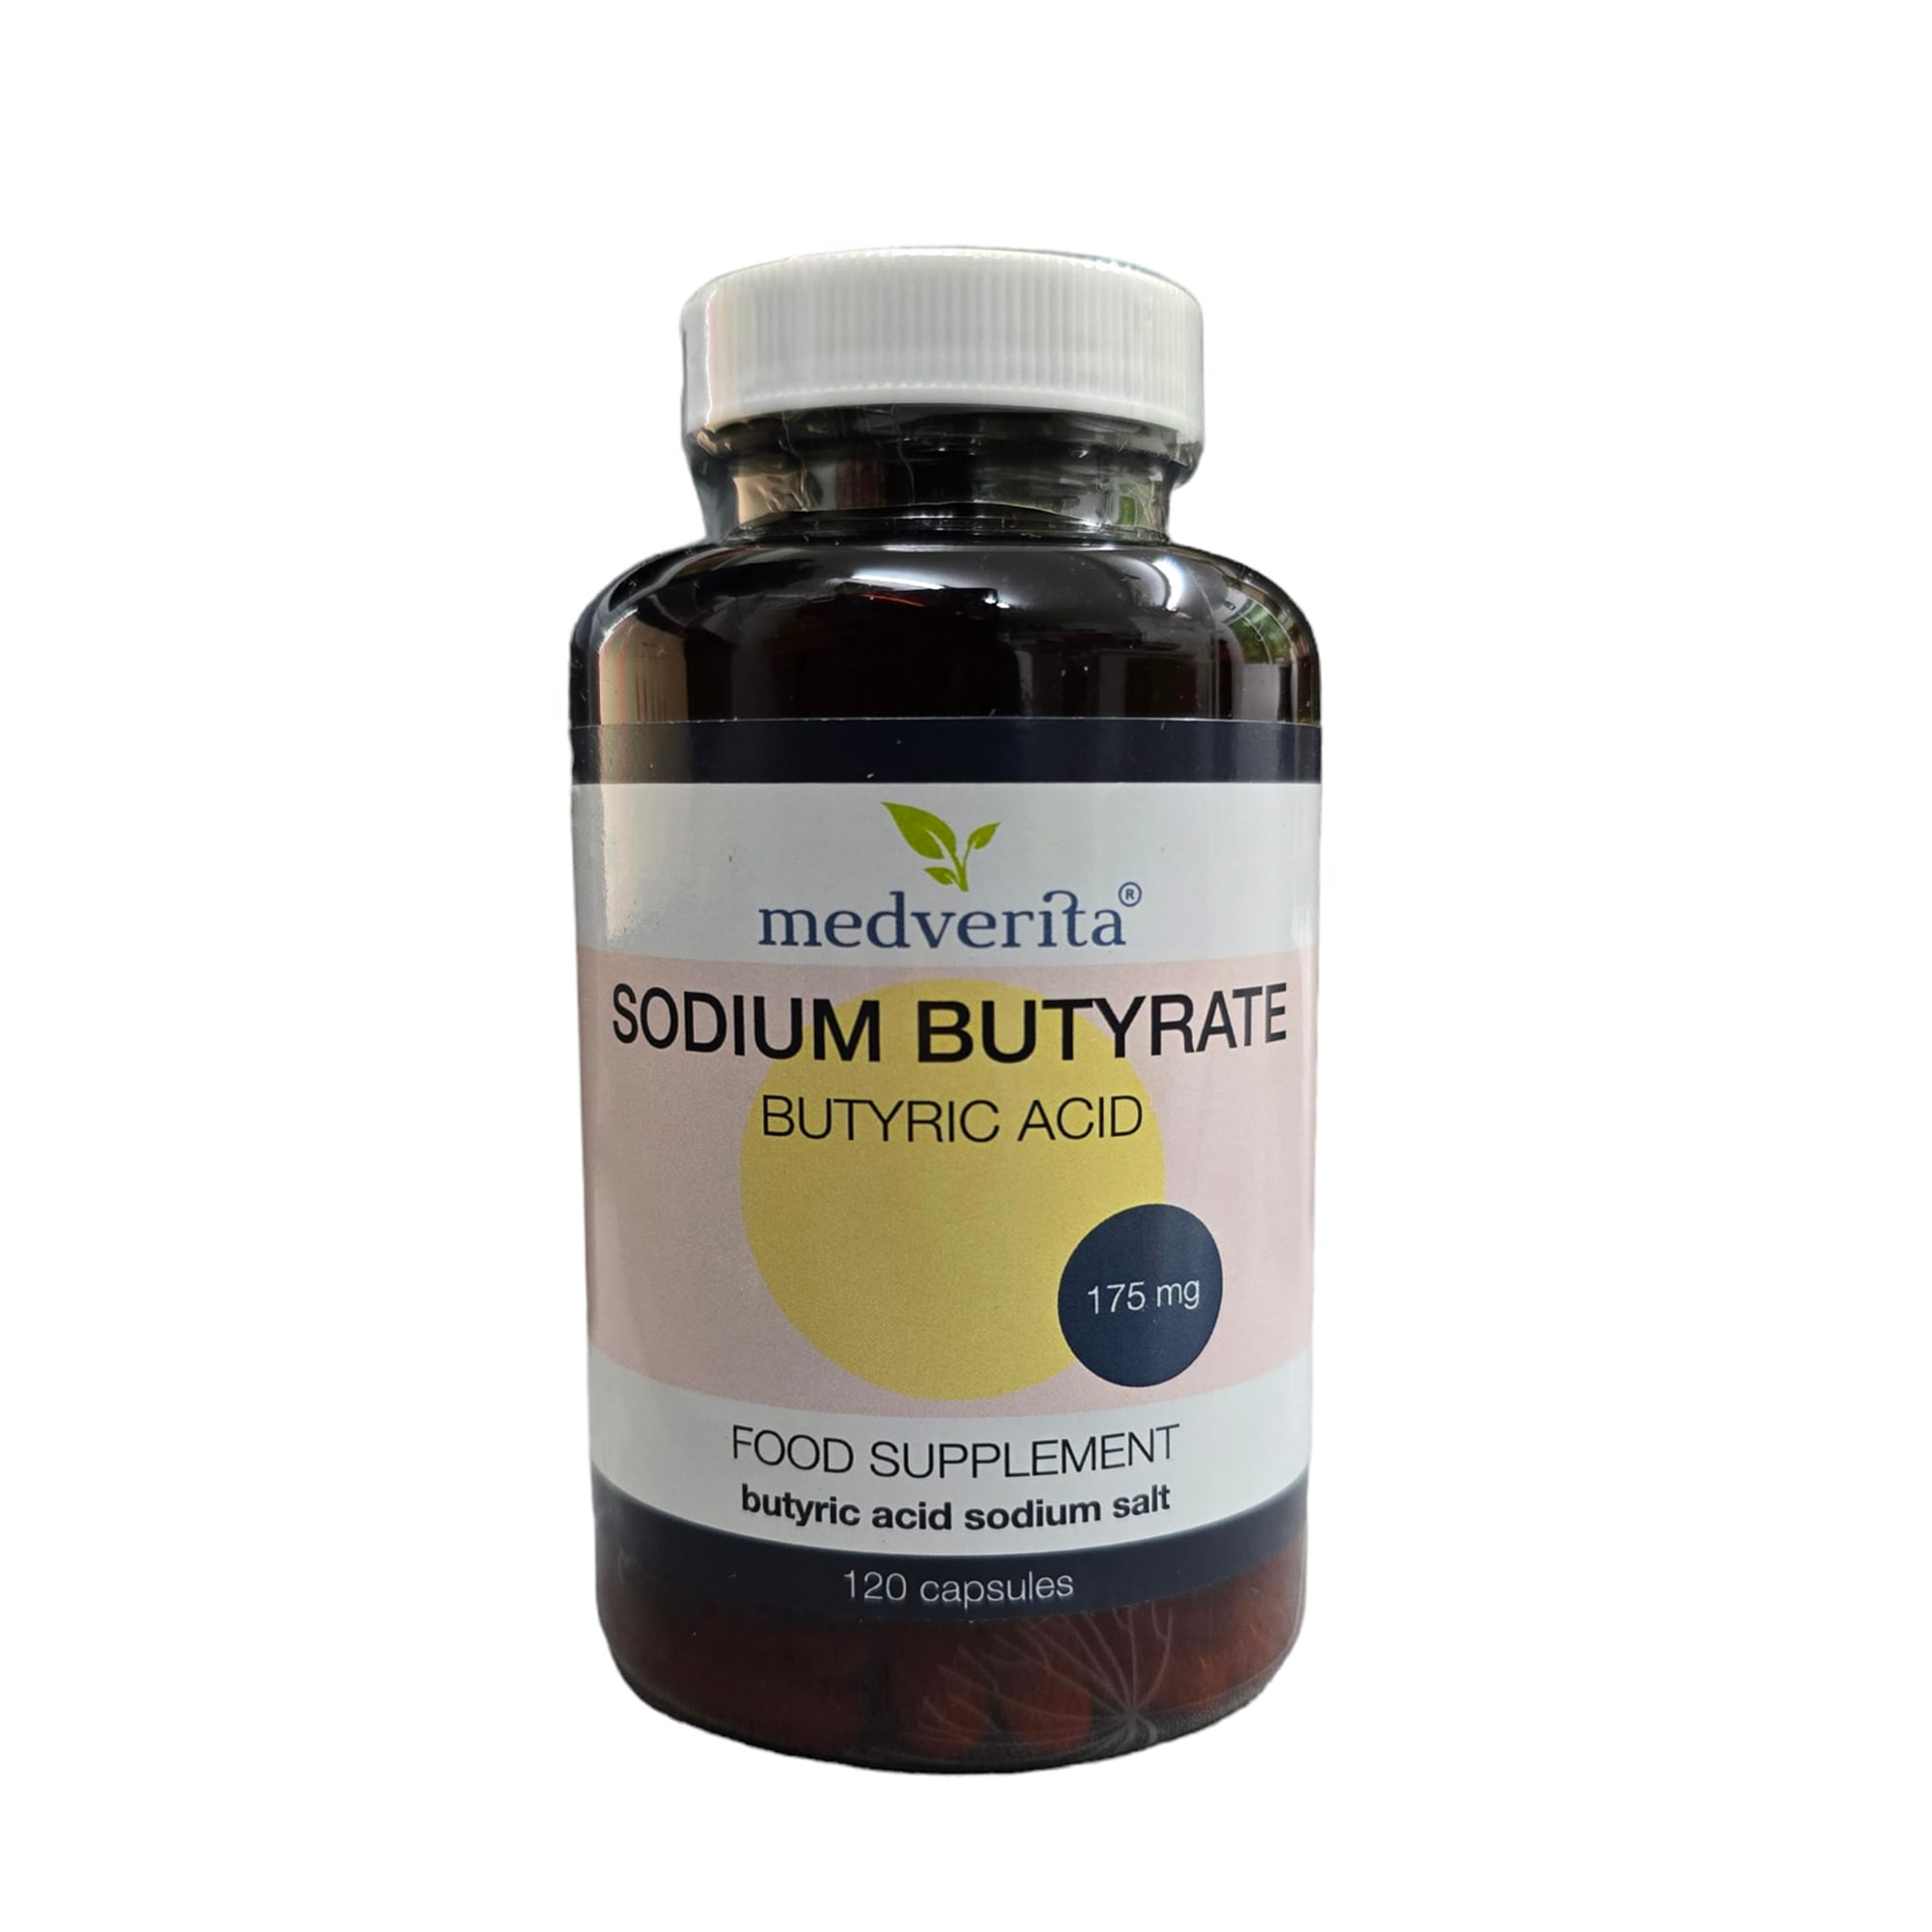 MEDVERITA Sodium Butyrate BUTYRIC ACID Sodium Salt 460mg 120 Capsules